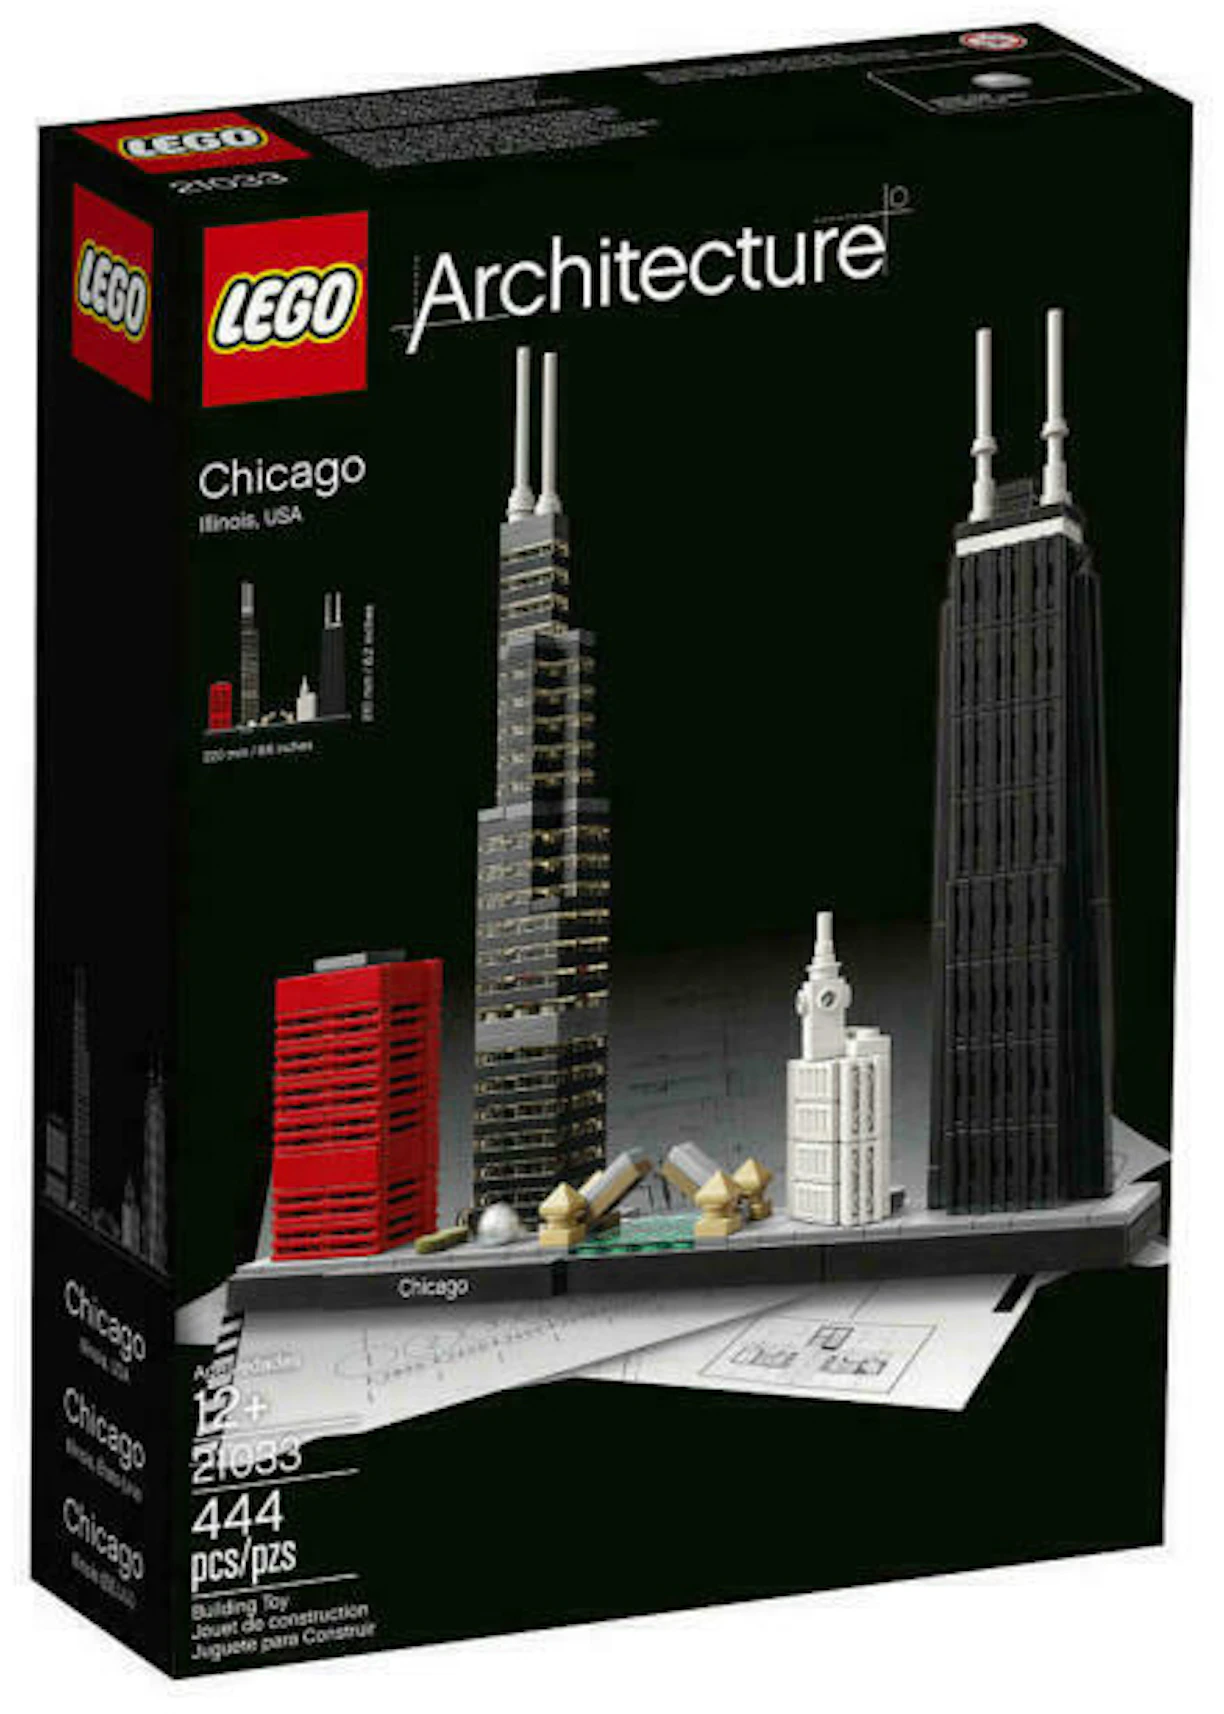 LEGO Architecture Chicago Set 21033 US